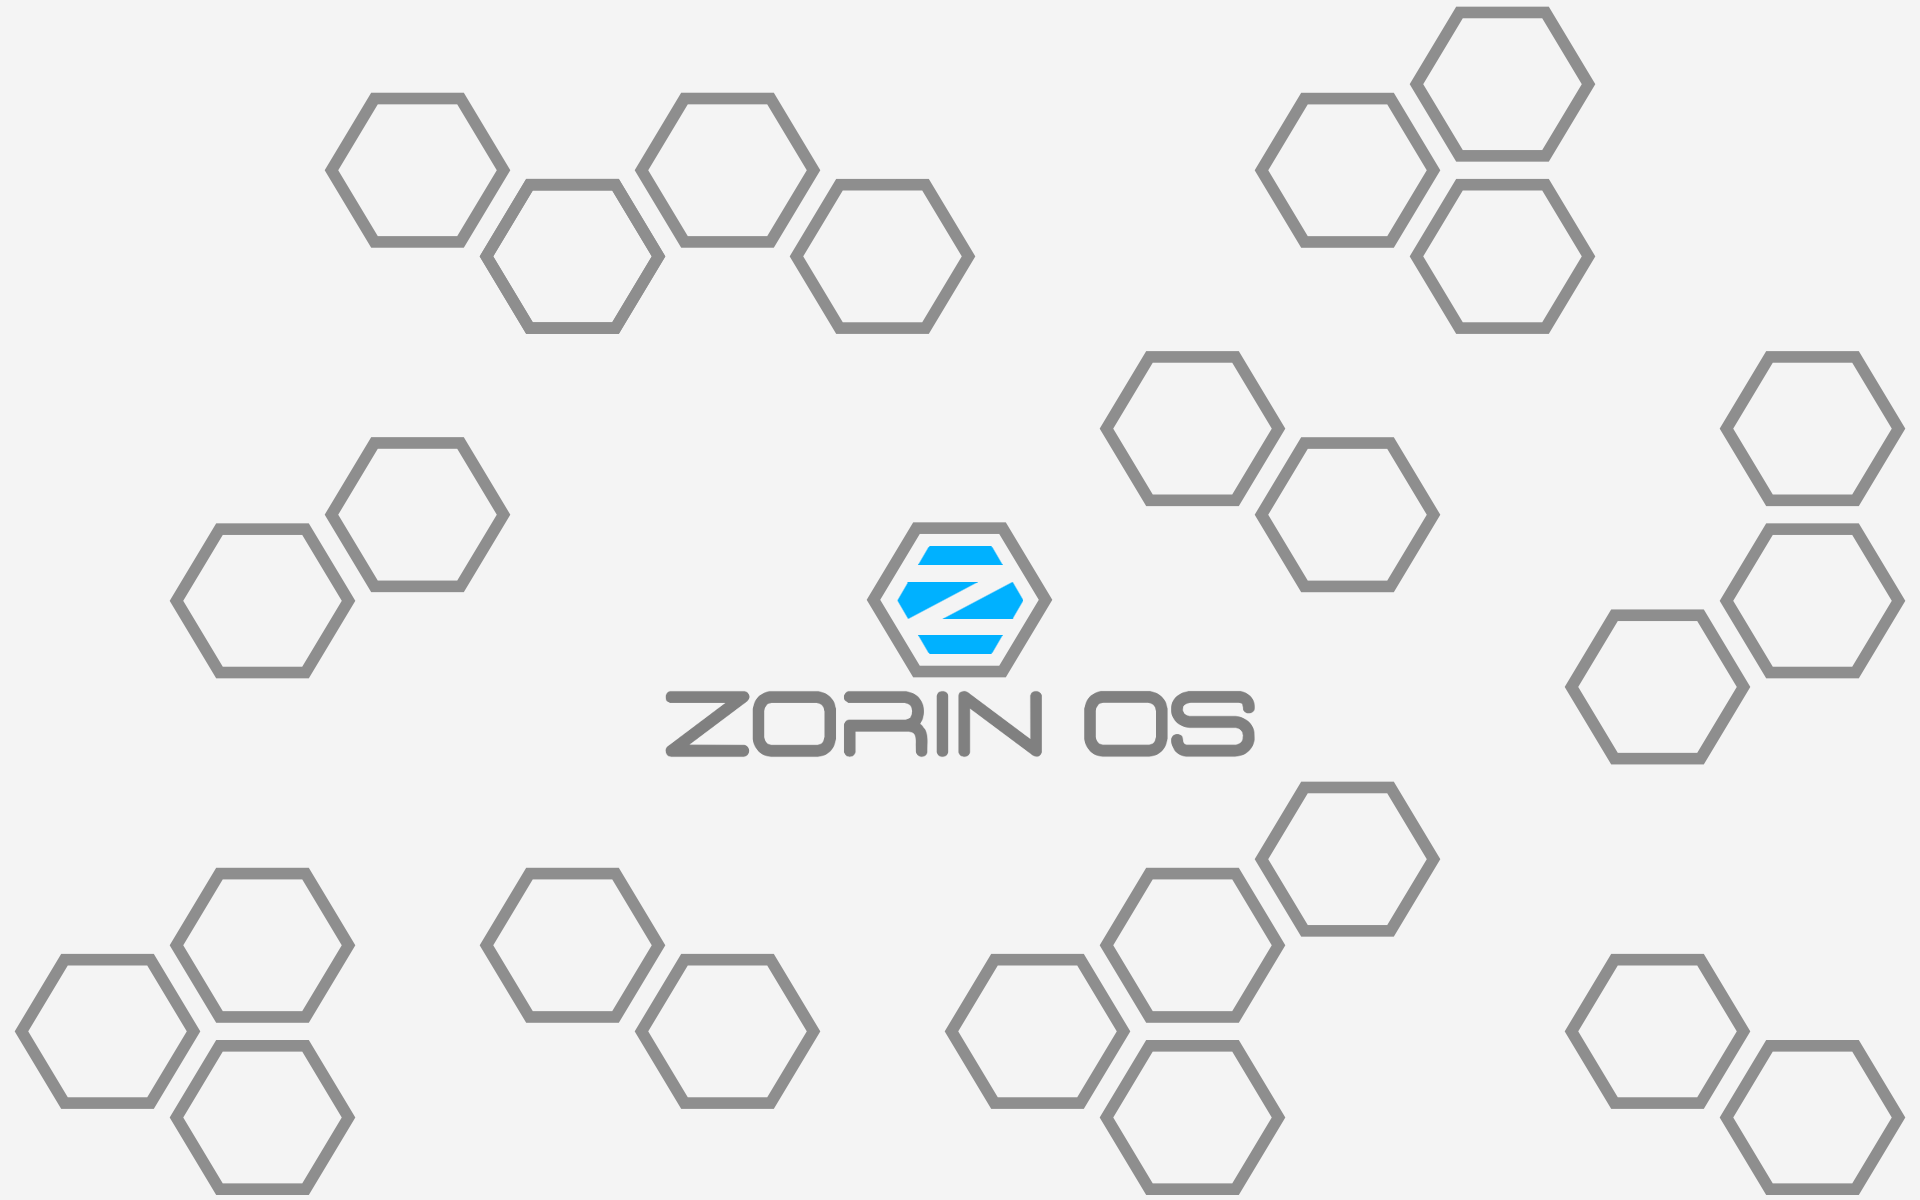 Zorin OS 7 - Grey Wallpaper Respin by sonicboom1226 on DeviantArt